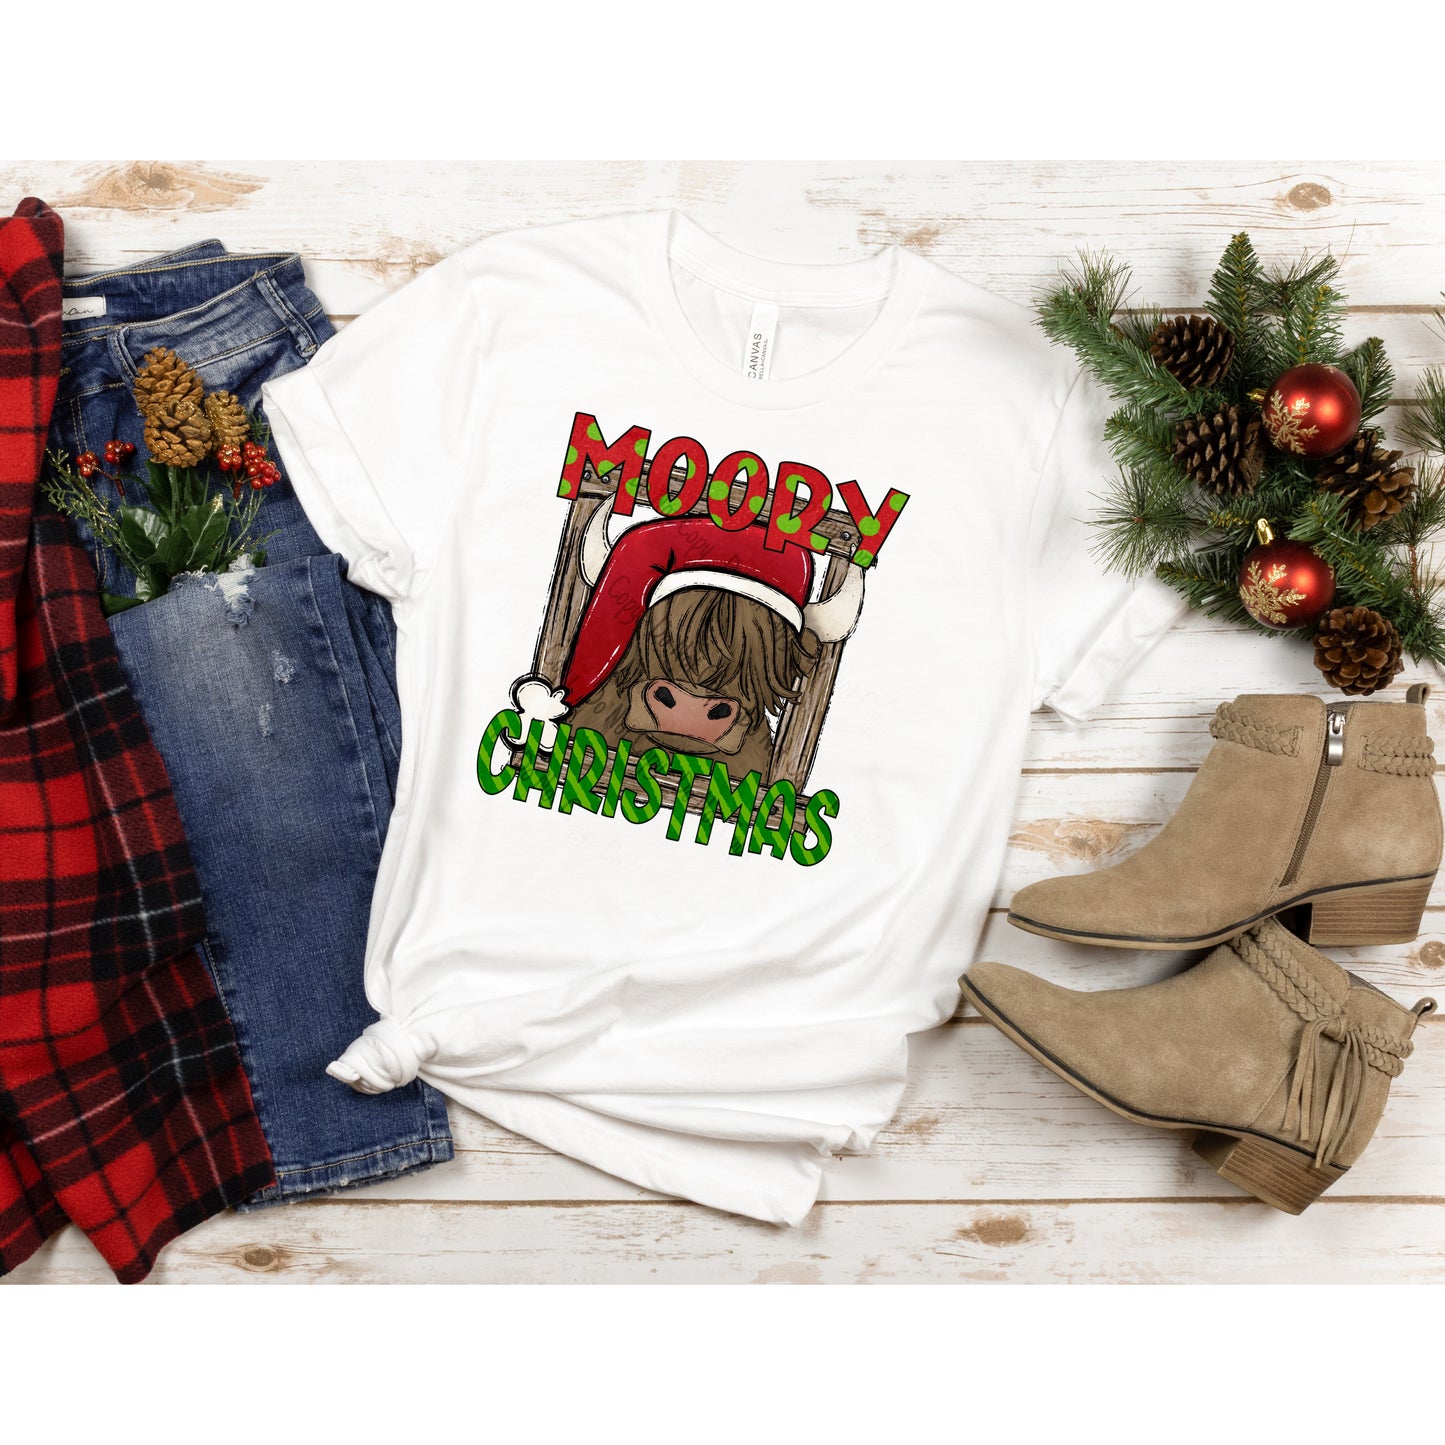 Moory Christmas T-shirt